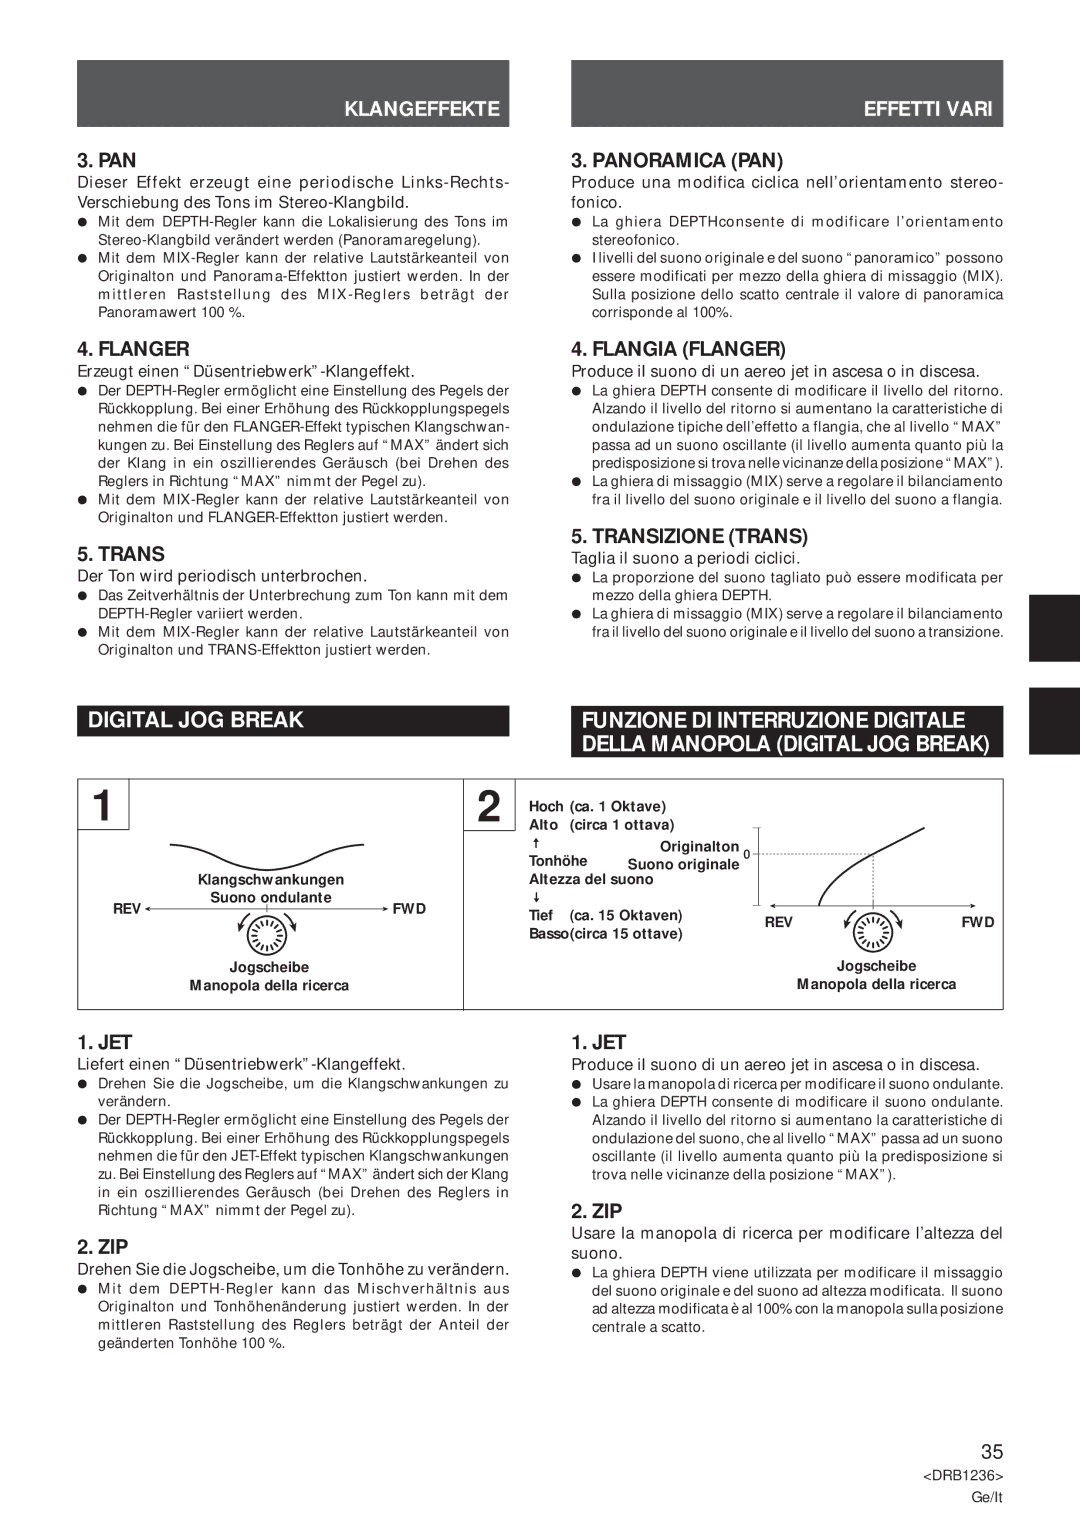 Pioneer Efx-500 operating instructions Digital JOG Break, Klangeffekte, Effetti Vari 